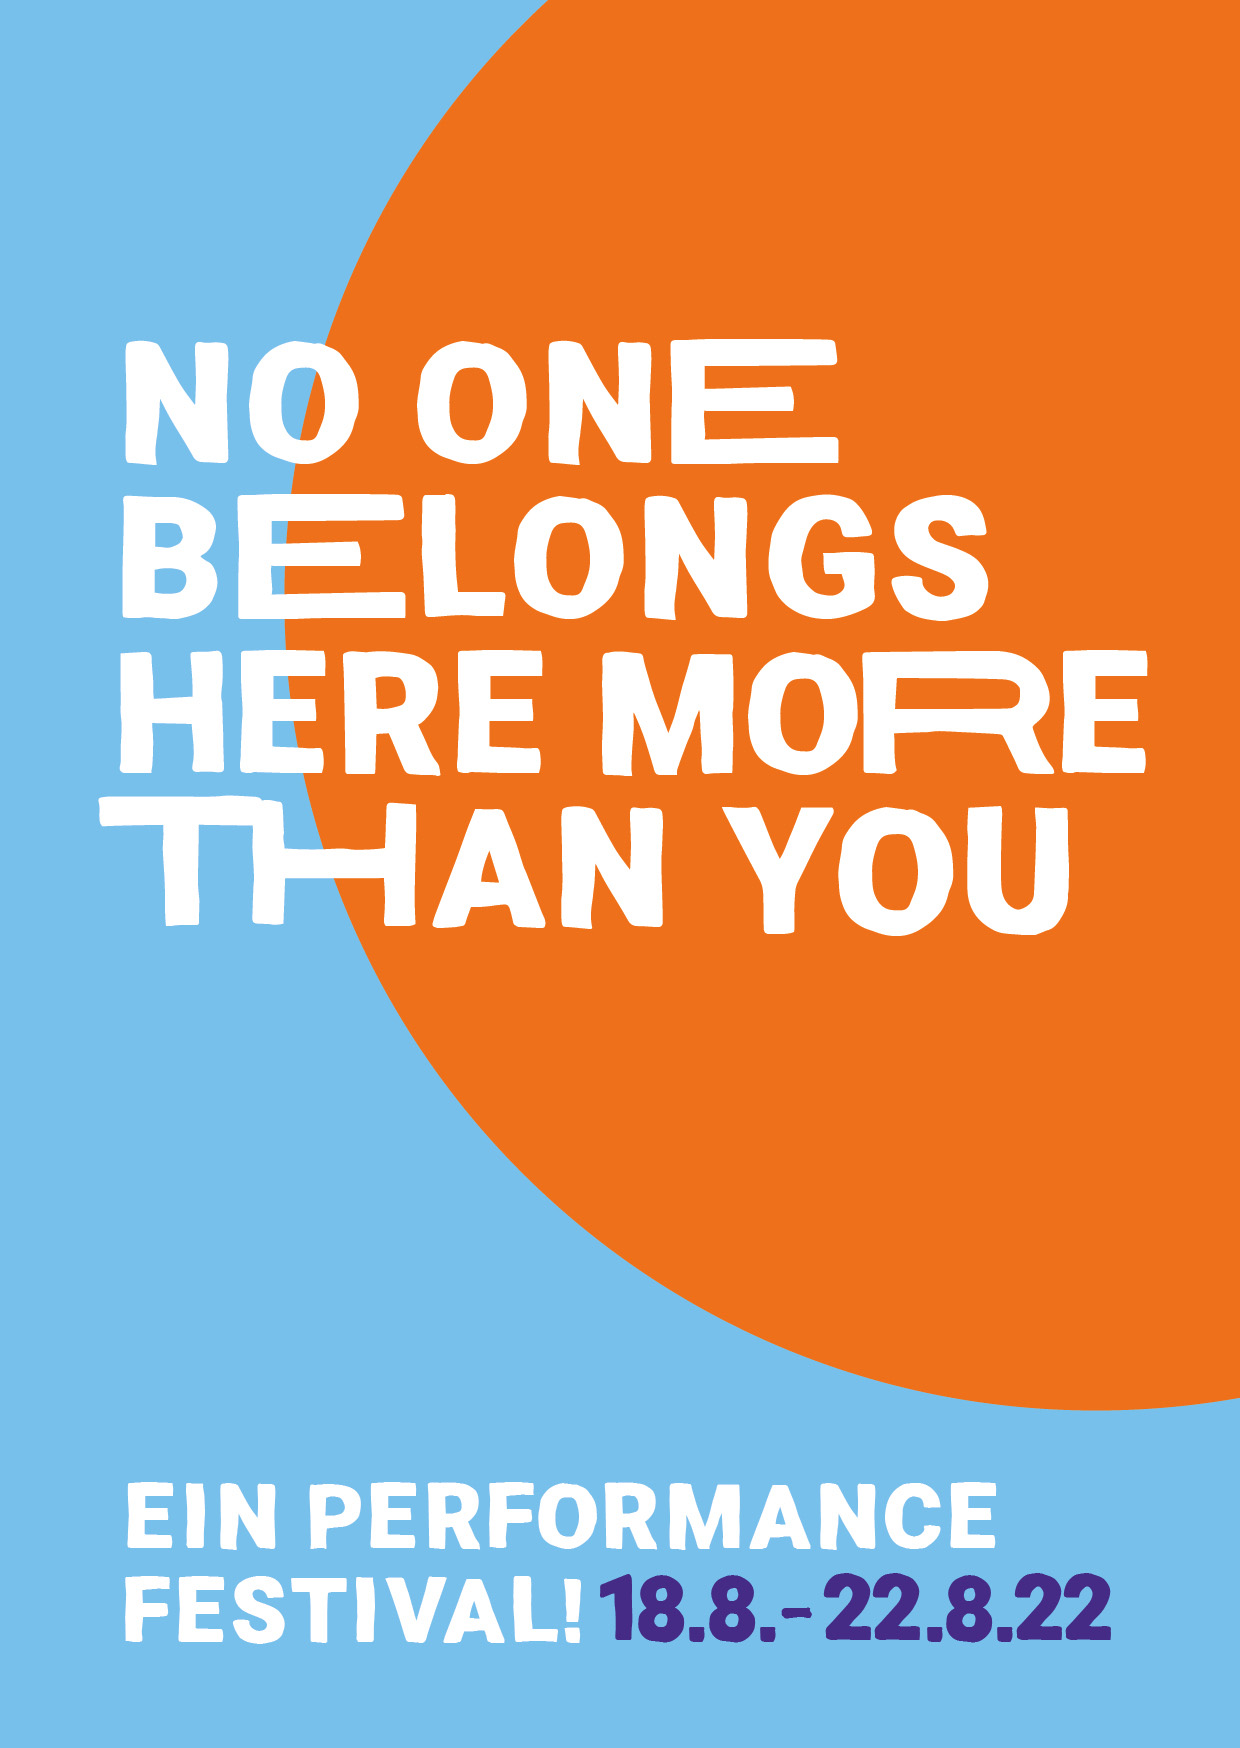 Performancefestival "No One Belongs Here More Than You" in der Saarländischen Galerie